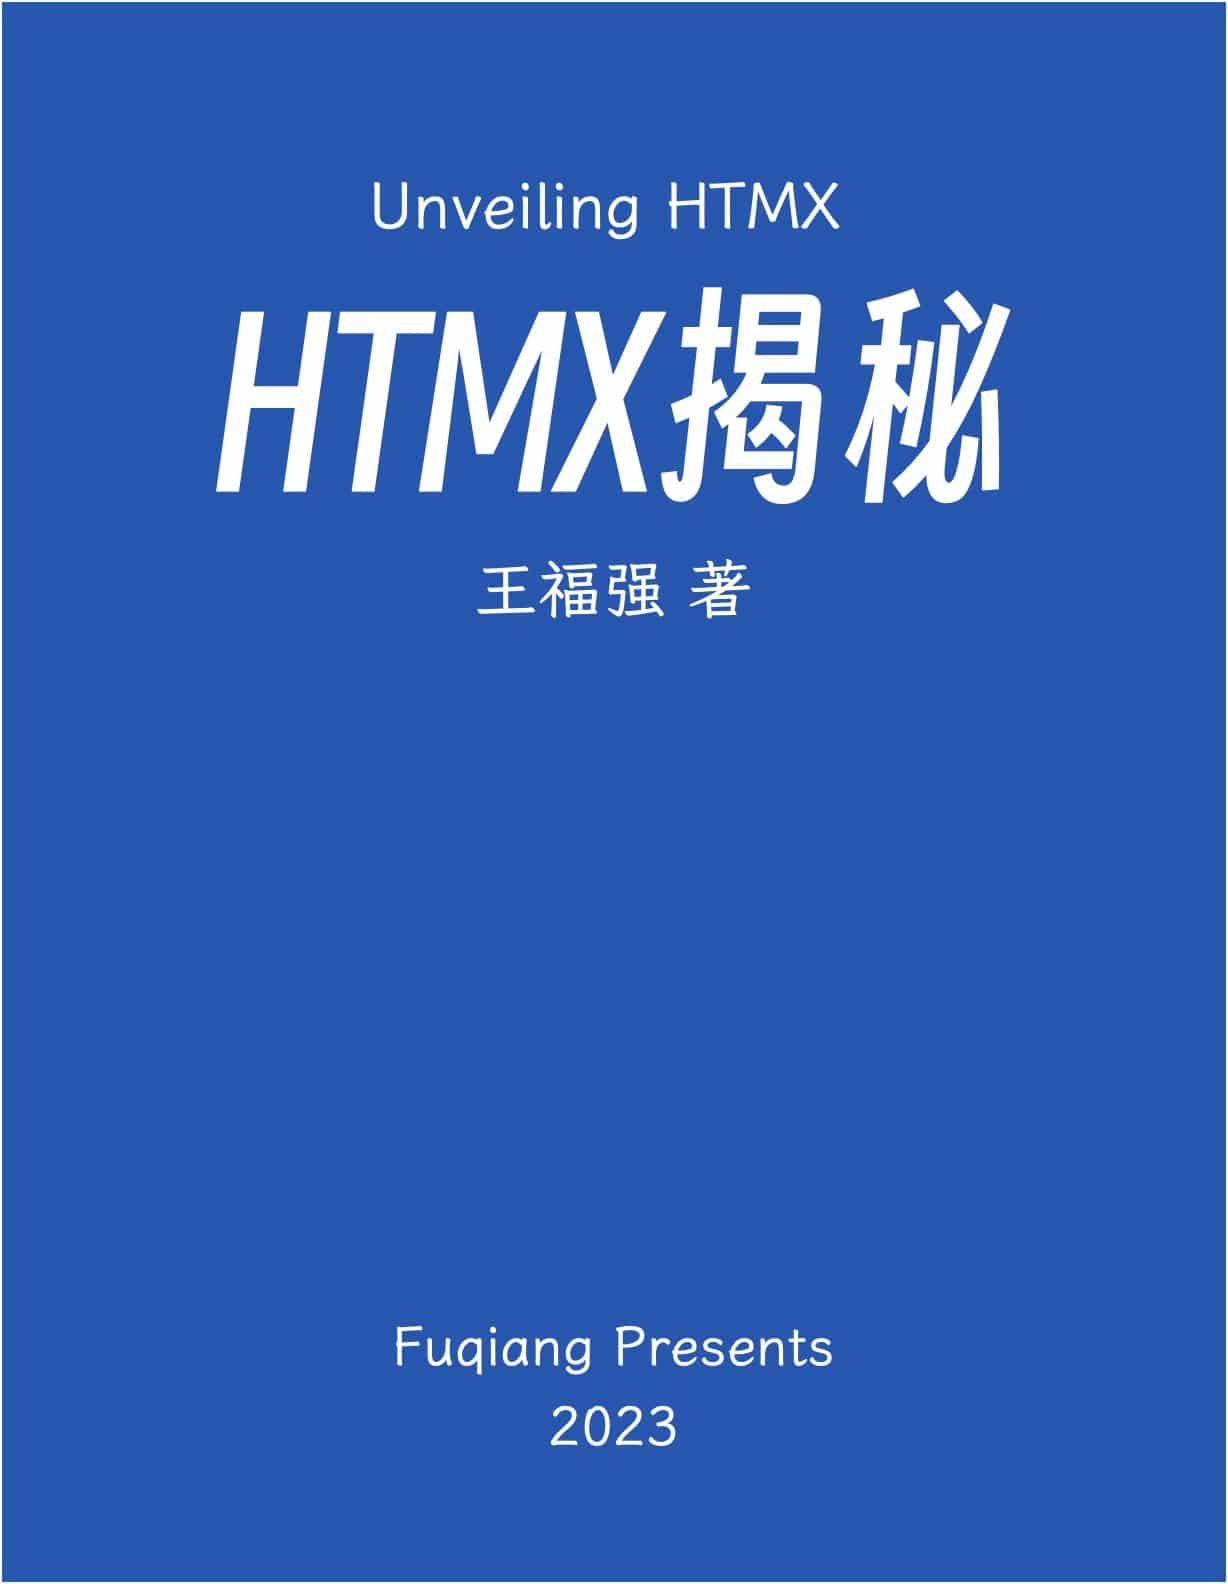 Unveiling HTMX